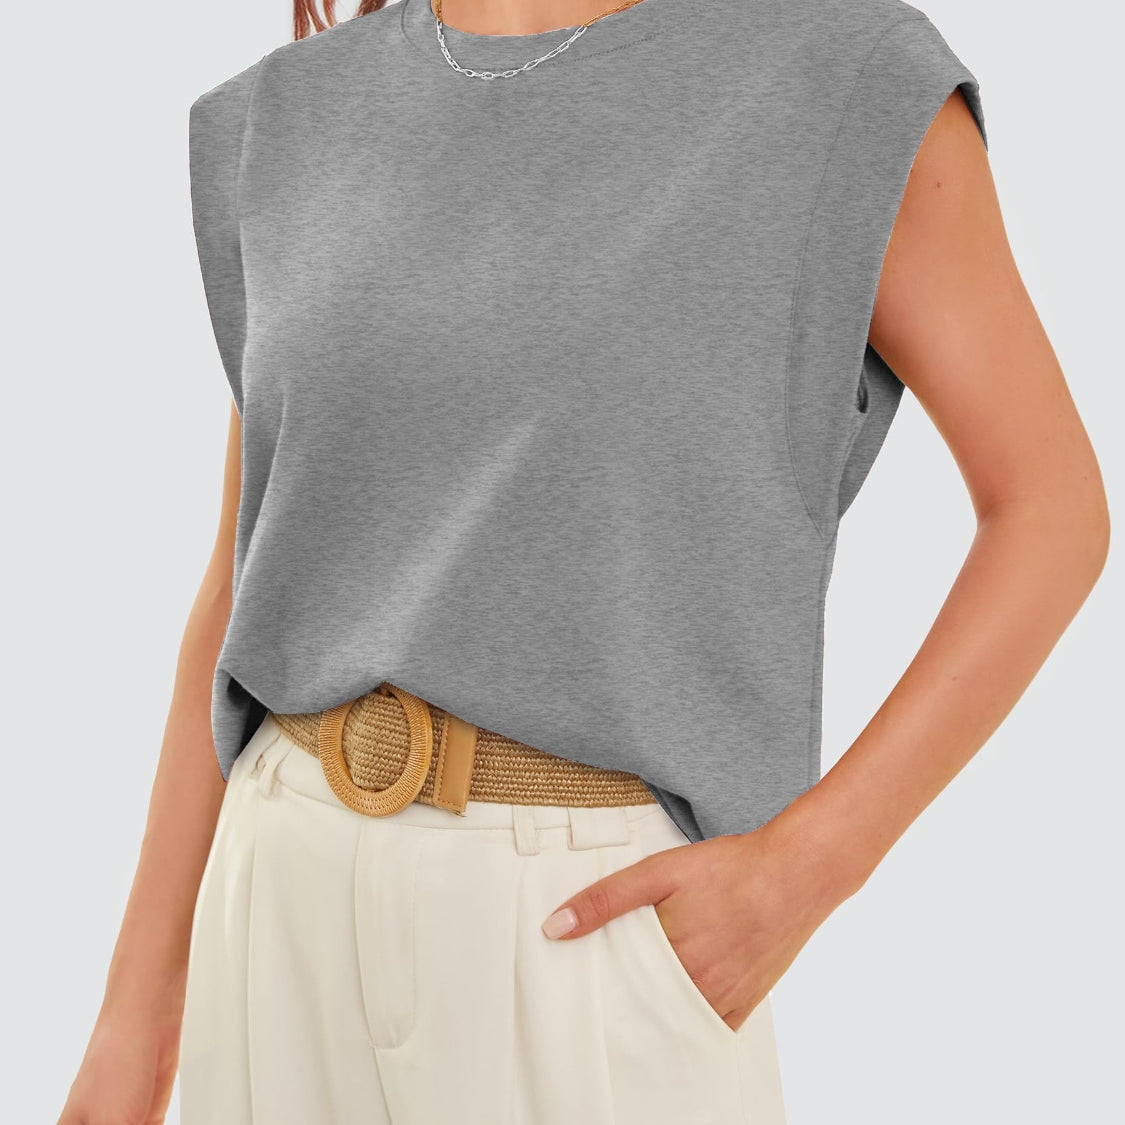 Heather Grey View. Round Neck Cap Sleeve Tank-Krush Kandy, Women's Online Fashion Boutique Located in Phoenix, Arizona (Scottsdale Area)